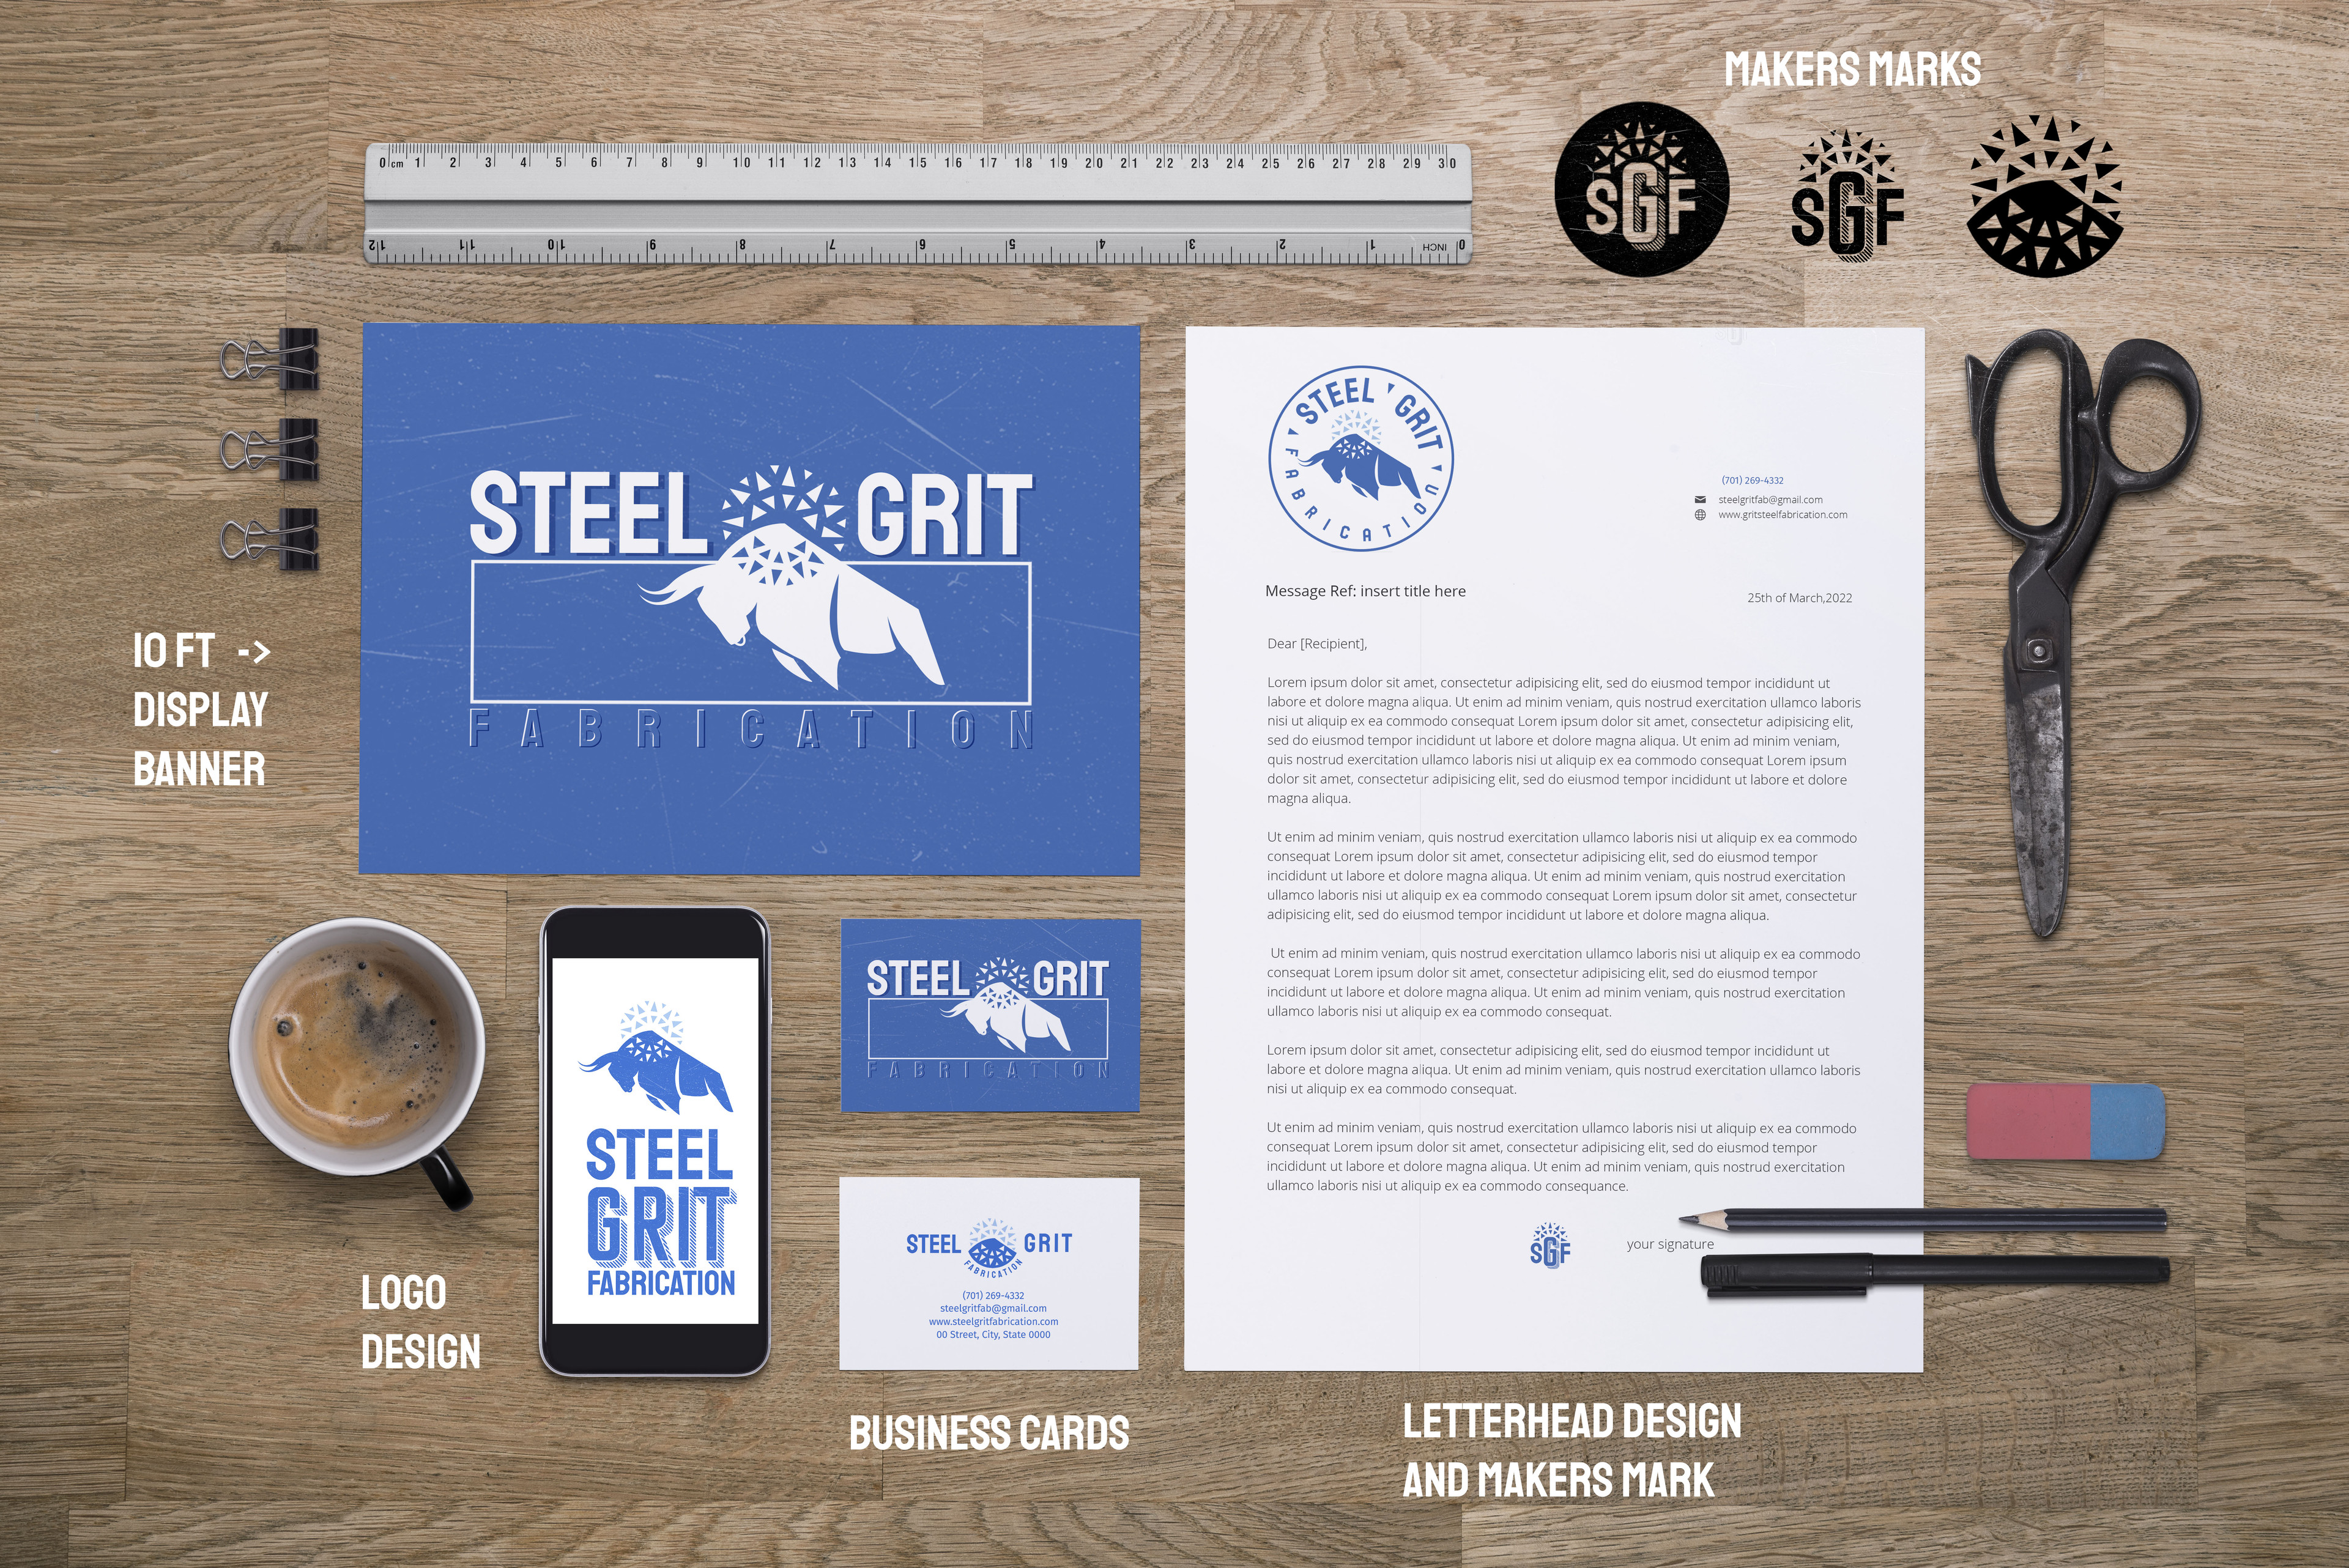 Steel Grit Fabrication company branding